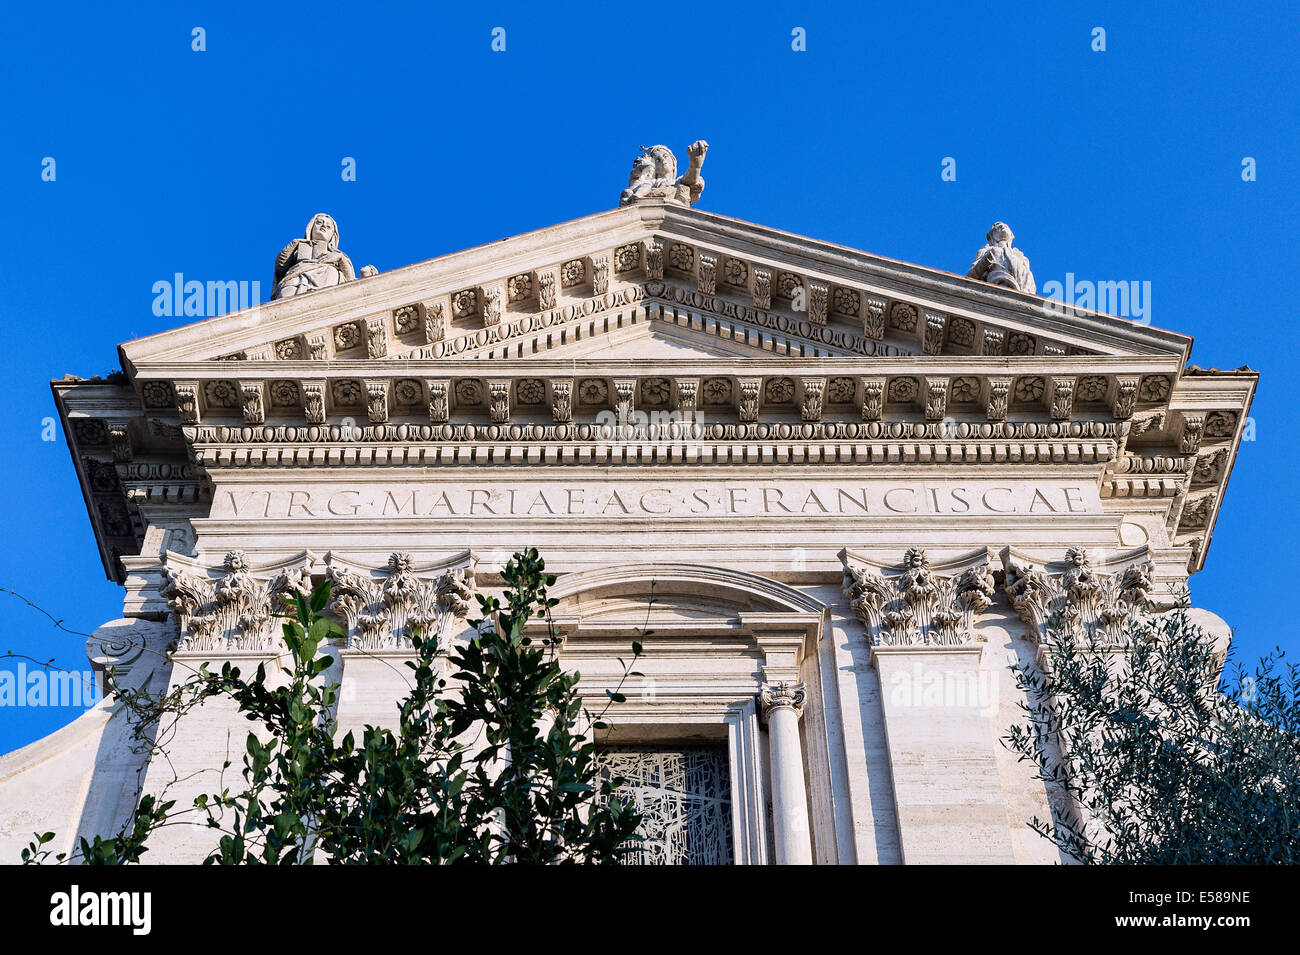 Santa Francesca Romana, previously known as Santa Maria Nova, Roman Forum, Rome, Italy Stock Photo